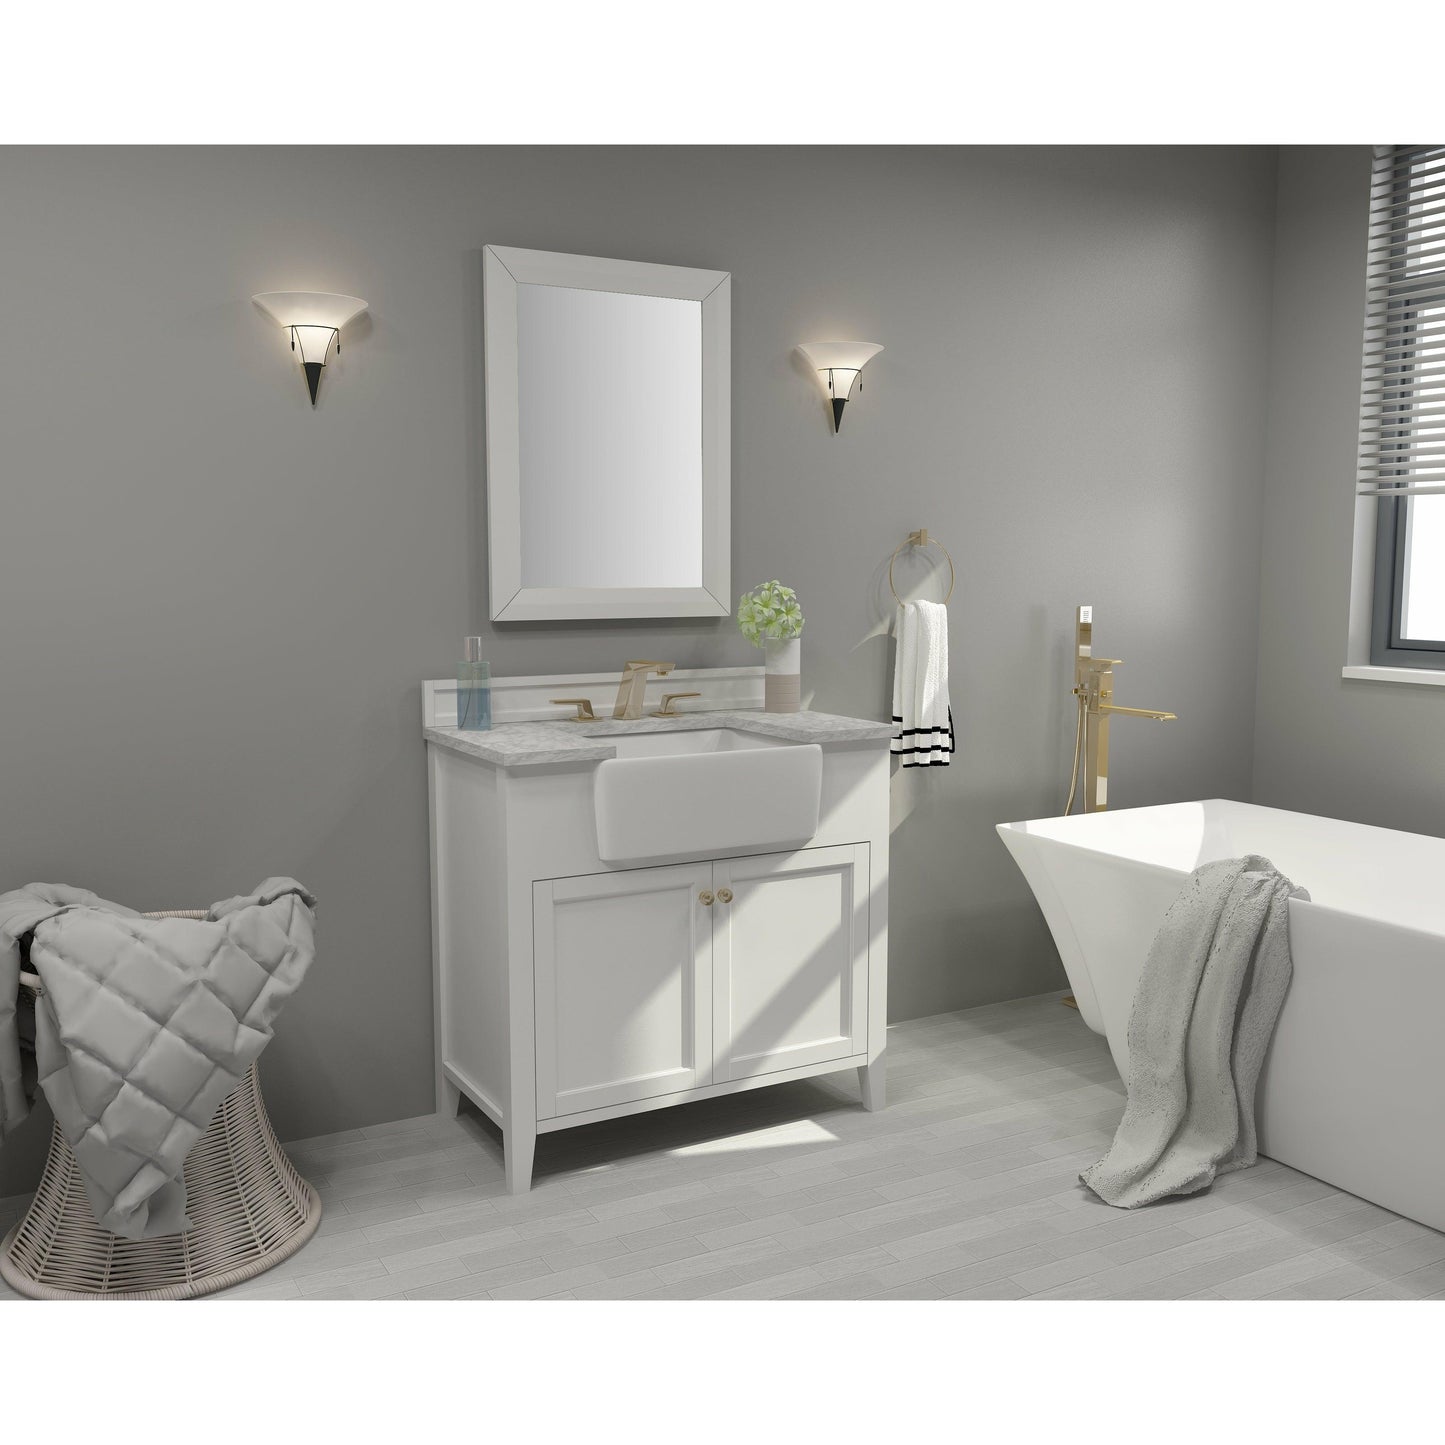 Ancerre Adeline Single Vanity Set with Italian Carrara White Marble Vanity Top and White Undermount Farmhouse Basin with Gold Hardware - Sea & Stone Bath